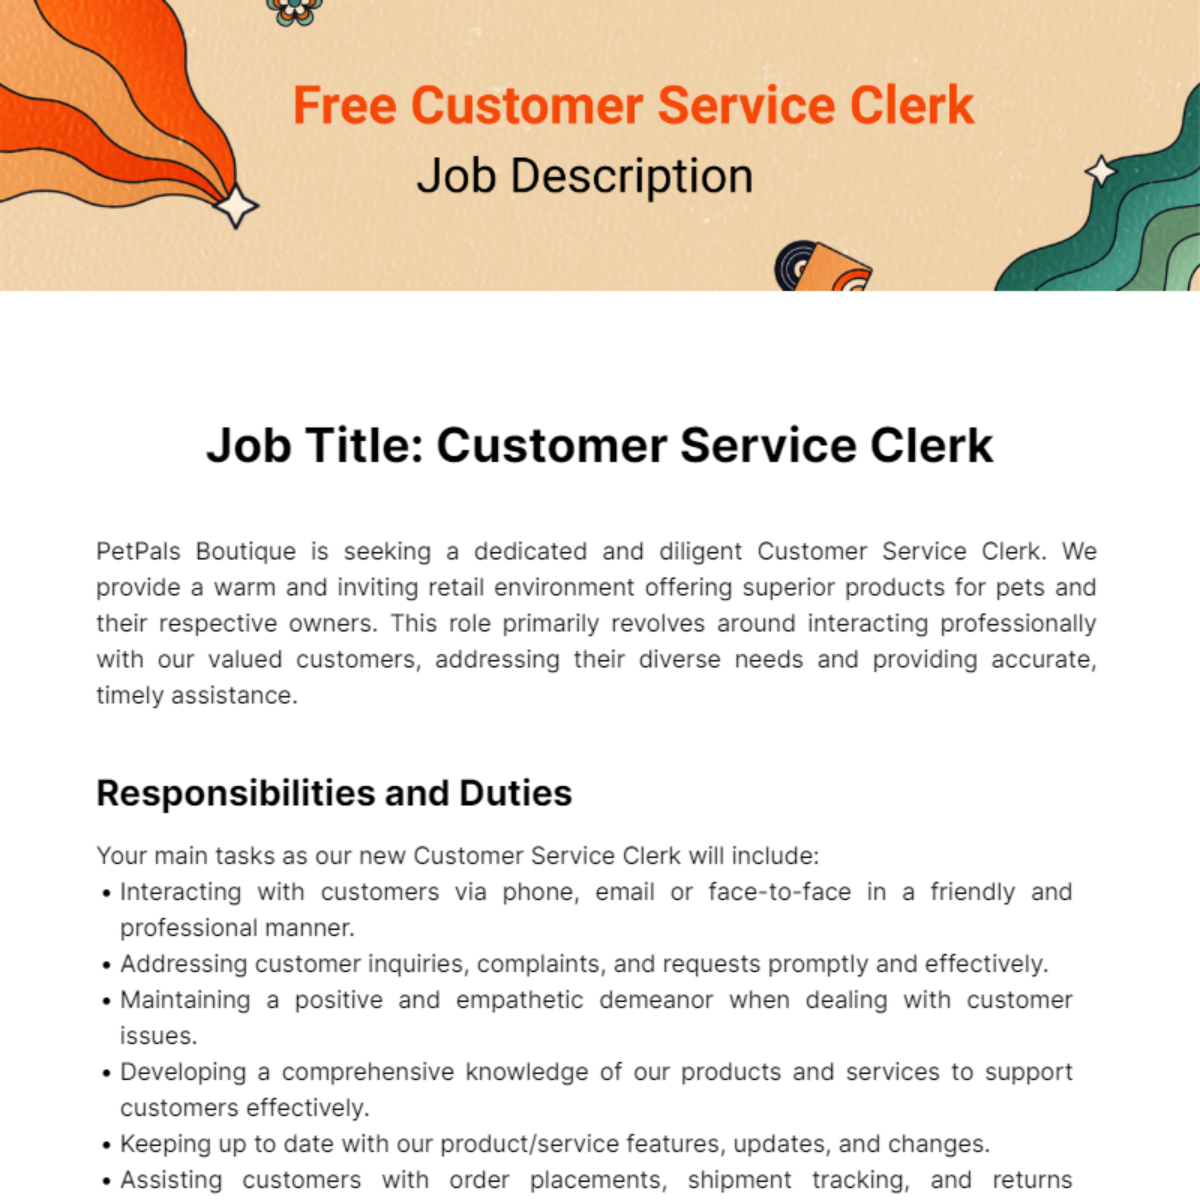 Free Customer Service Clerk Job Description Template